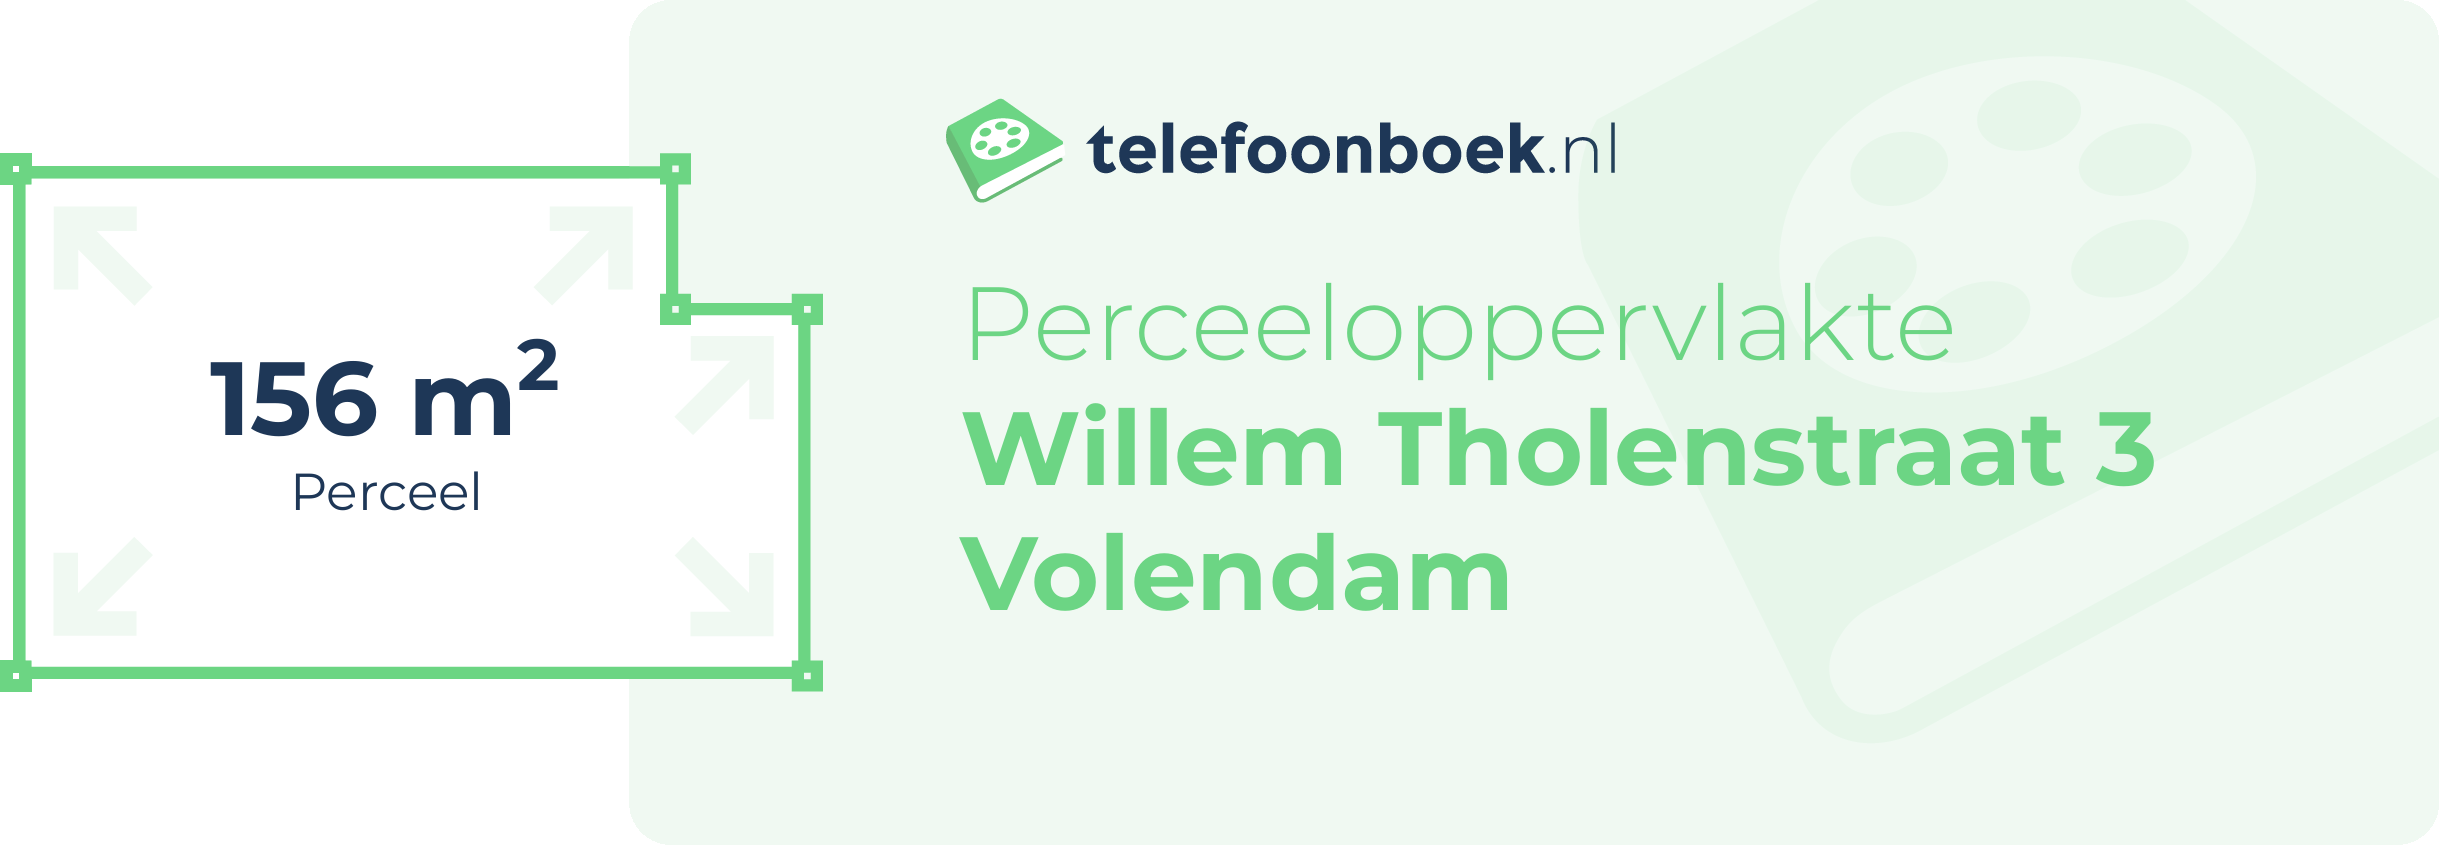 Perceeloppervlakte Willem Tholenstraat 3 Volendam